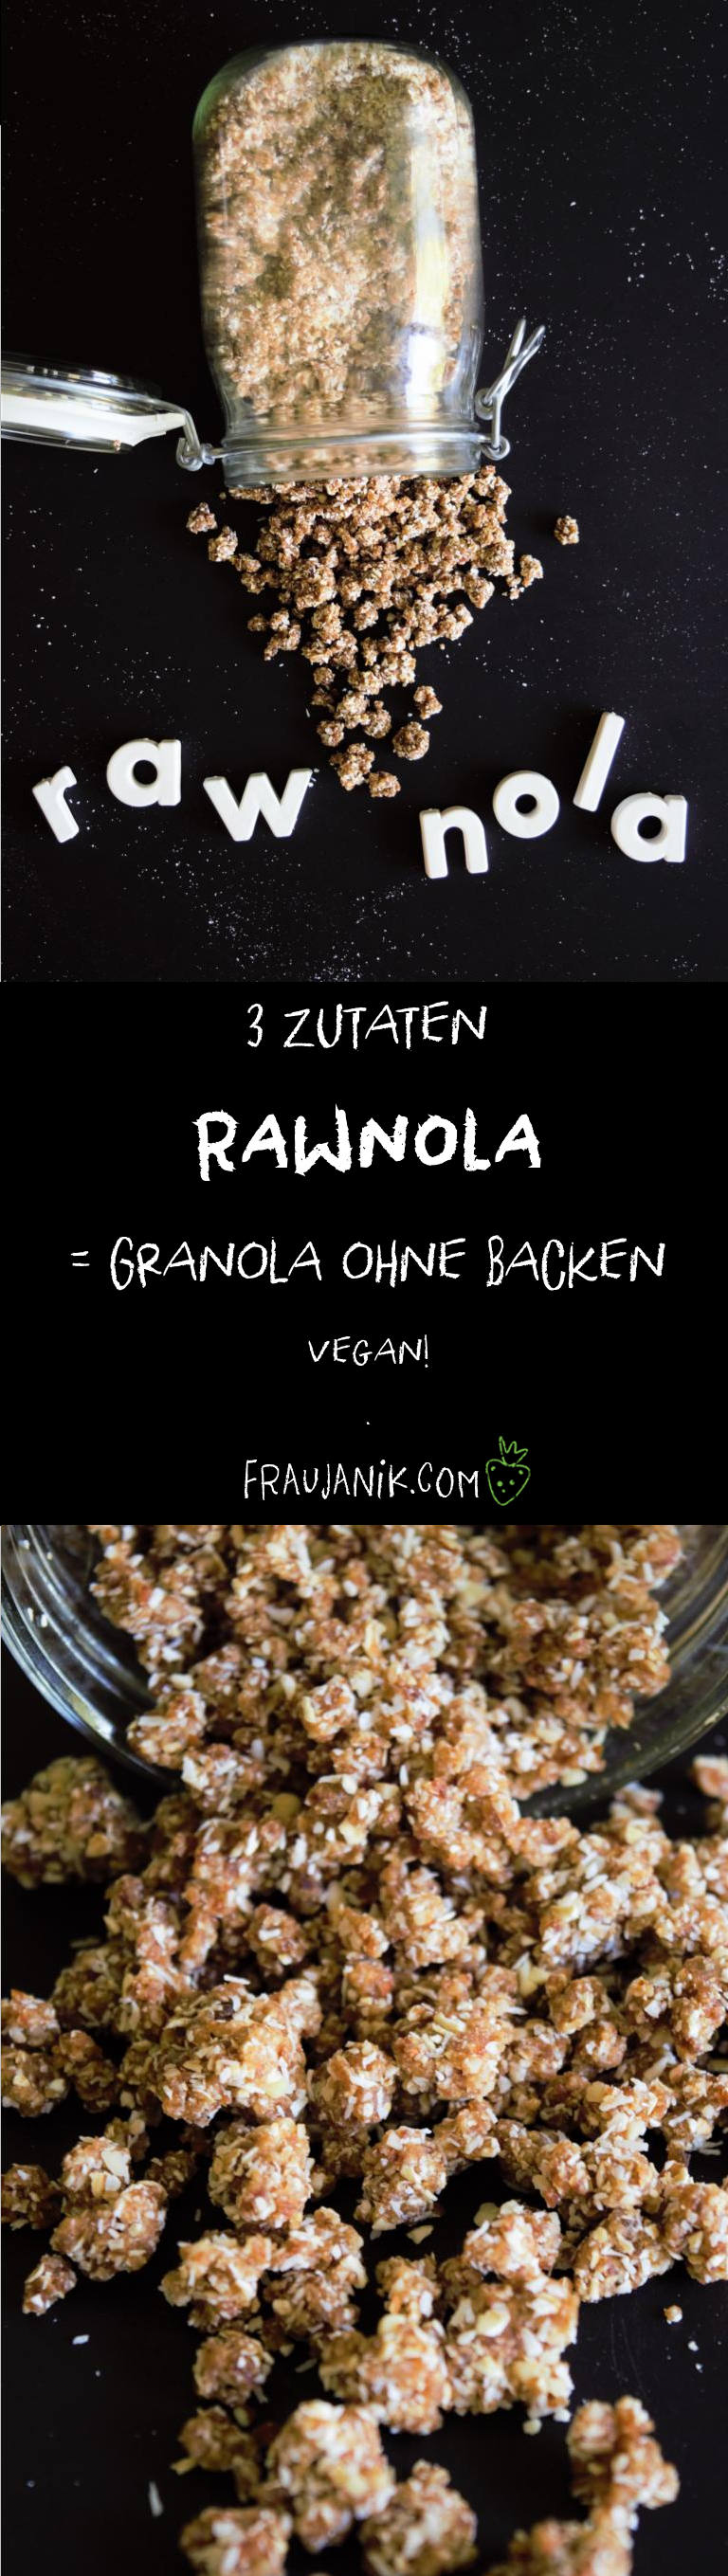 Rawnola, Granola ohne Backen